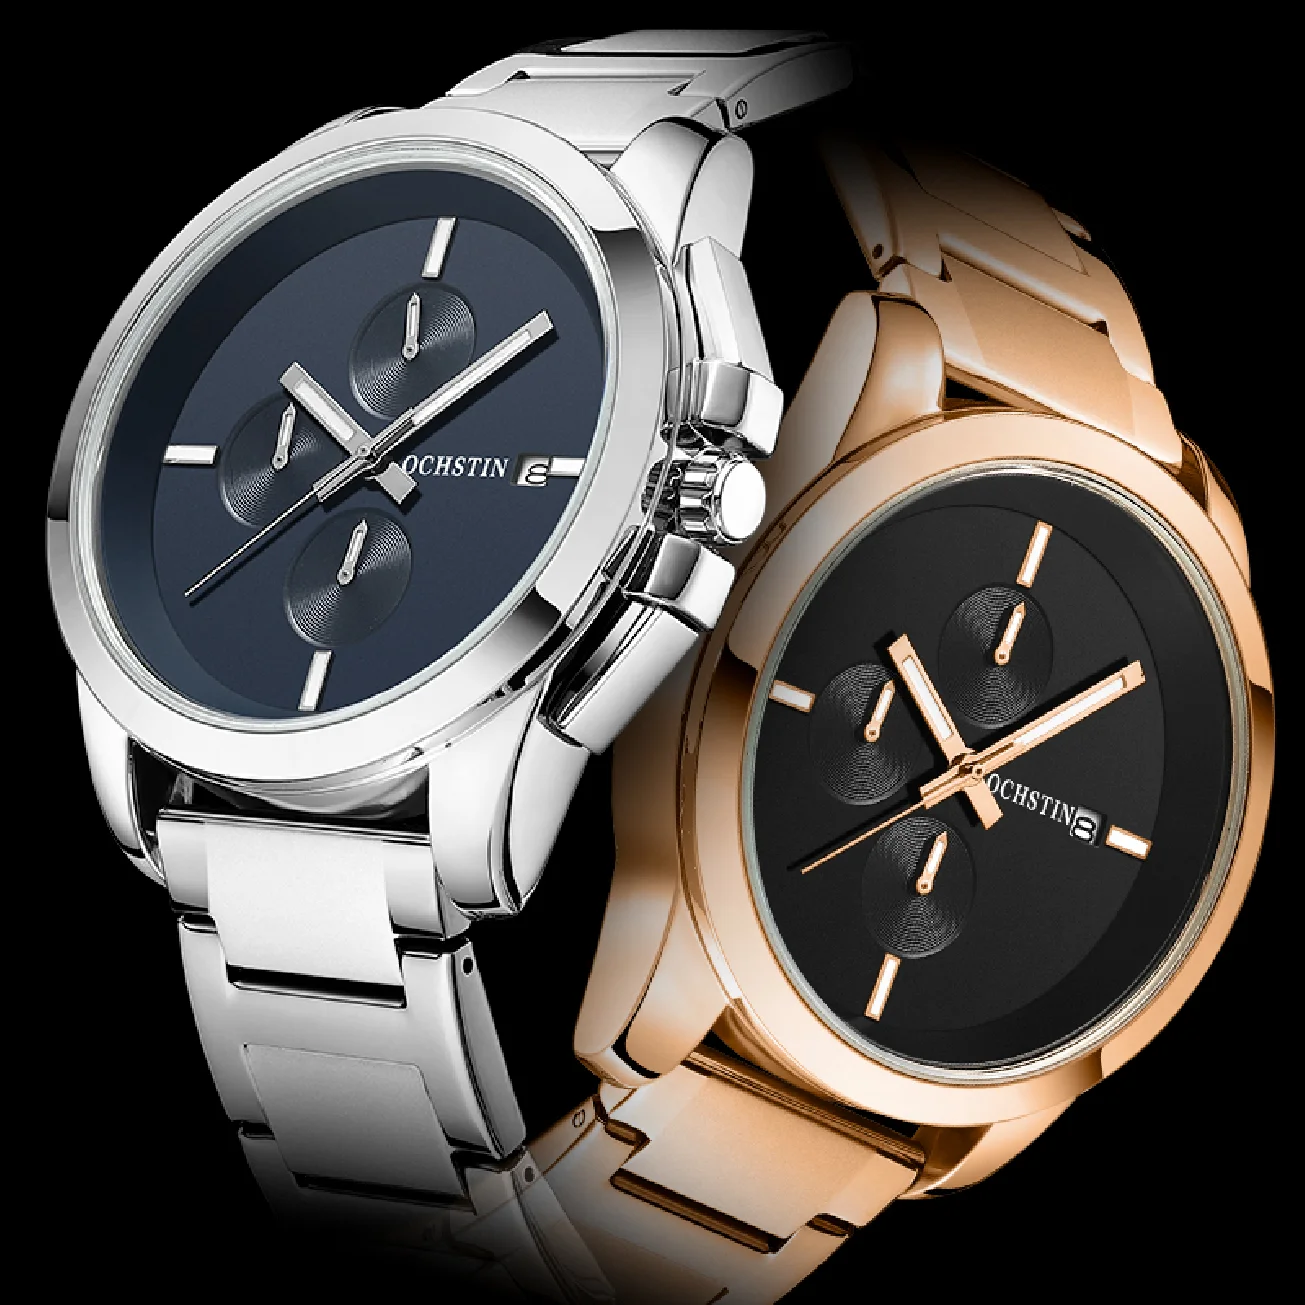 

OCHSTIN Men Chronograph Business Quartz Watch Top Brand Luxury Chronograph Analog Stainless Steel Waterproof Wristwatch